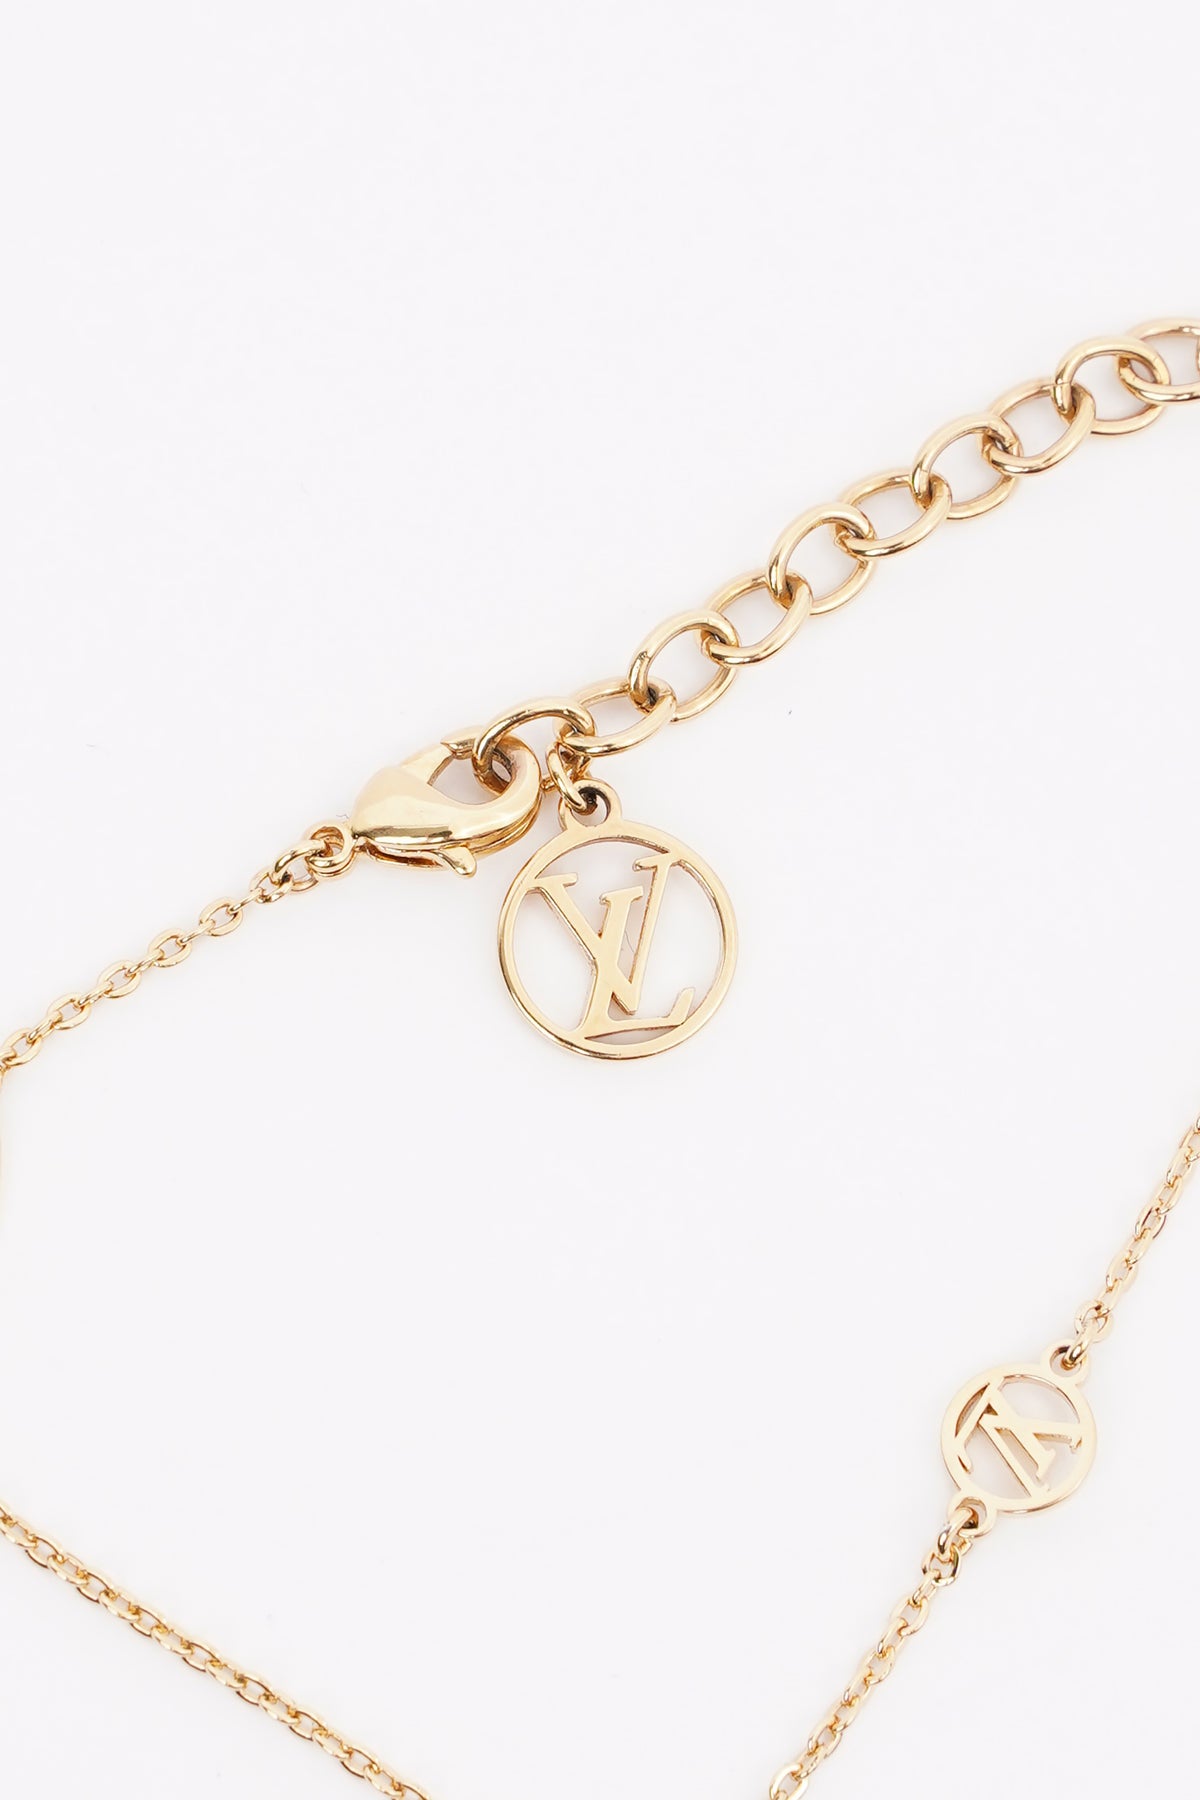 Louis Vuitton Nanogram Bracelet Gold Gold Plated OS – Luxe Collective